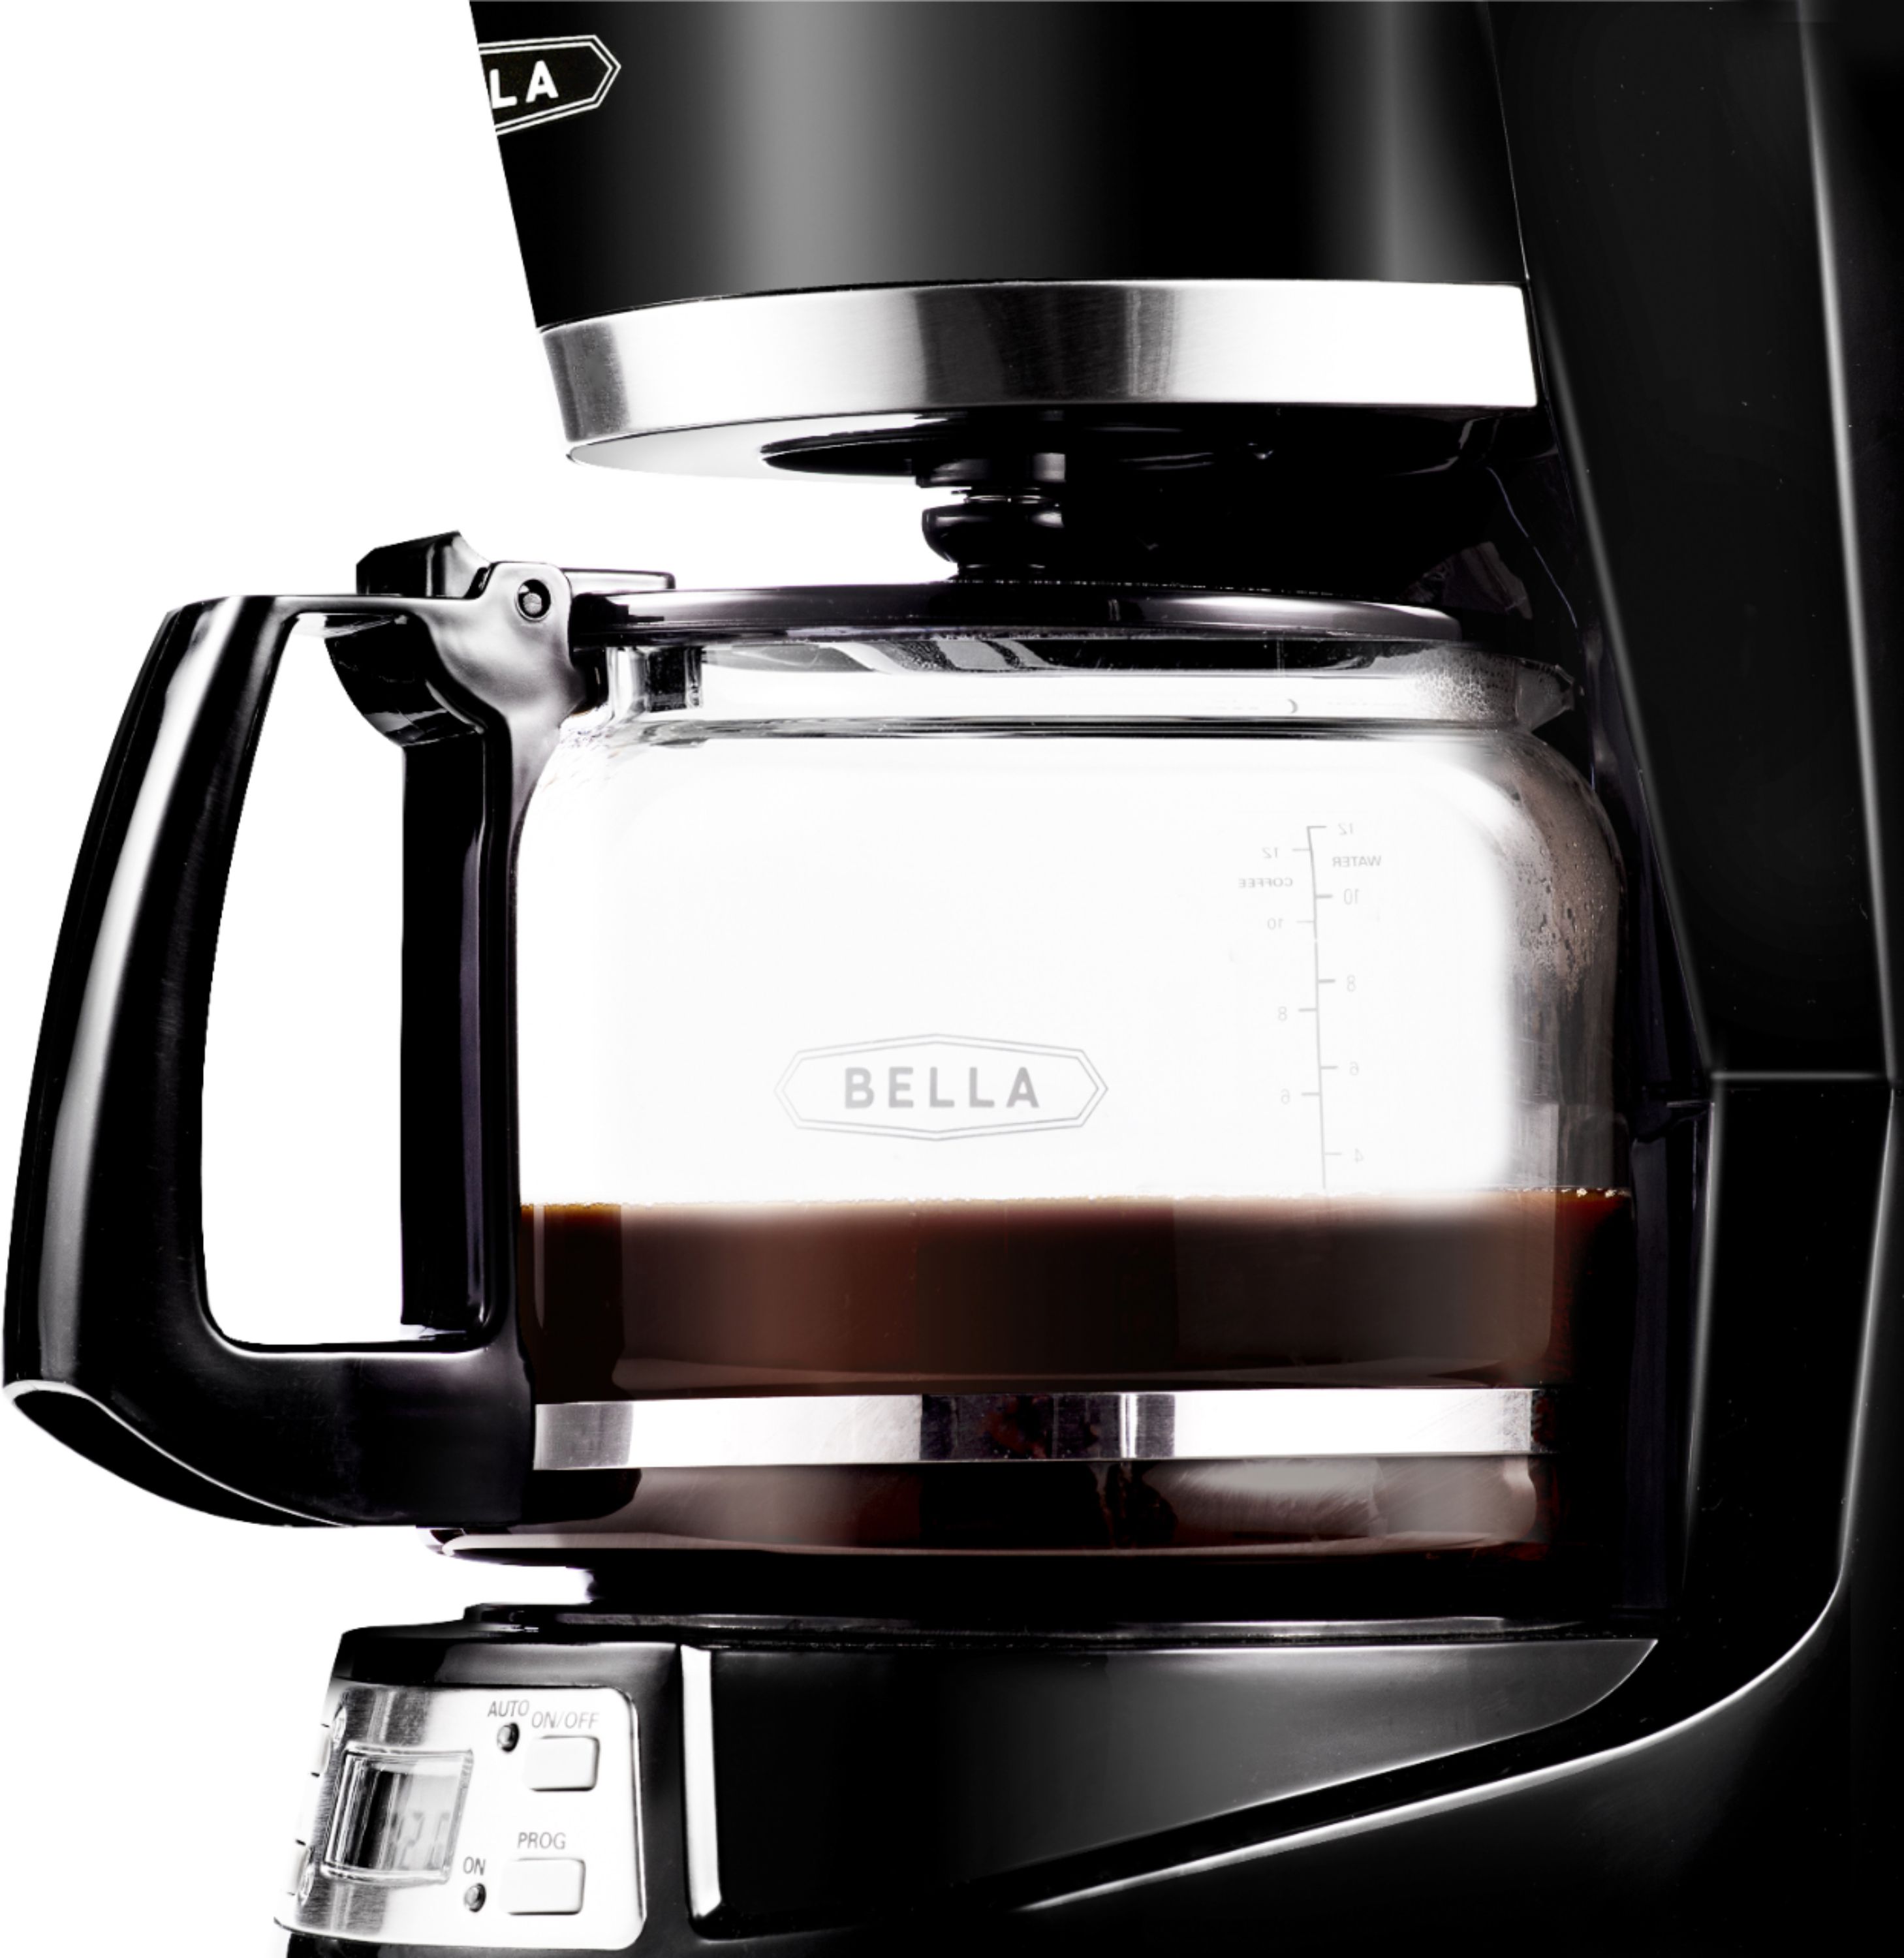 NRFB Bella PINK 12 Cup Programmable COFFEE MAKER MIB 